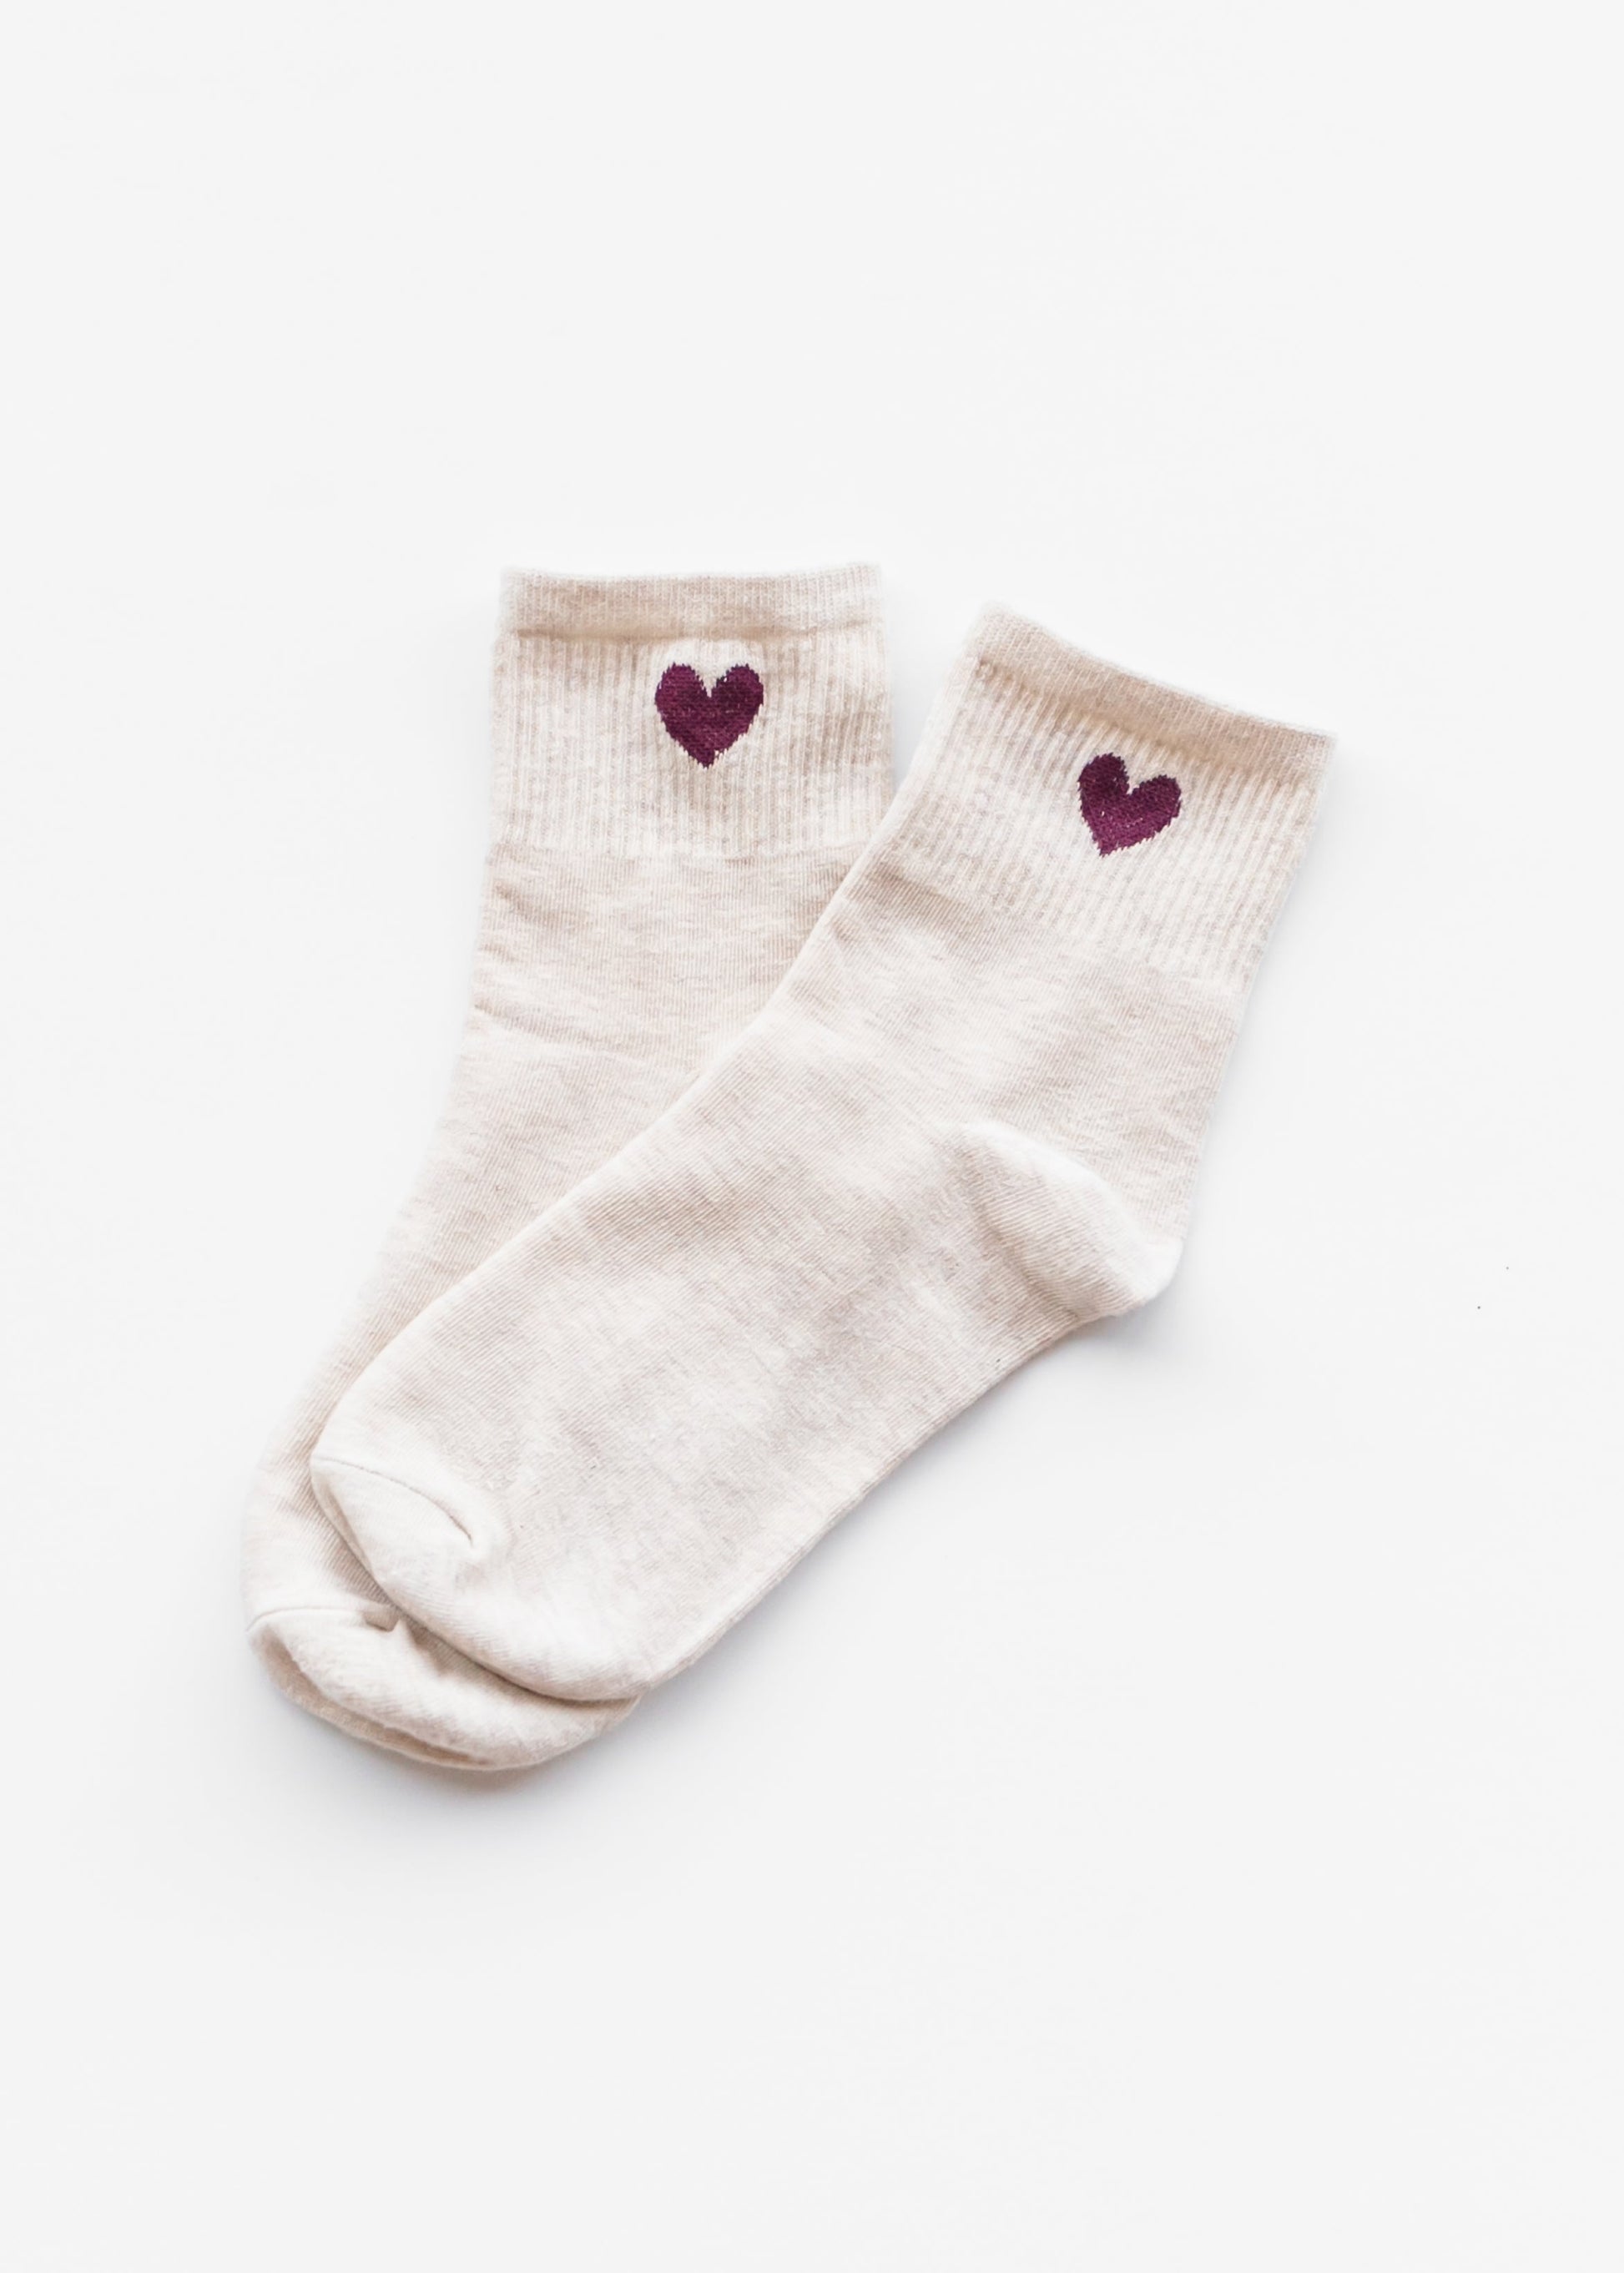 Heart Printed Ankle Socks Accessories Khaki